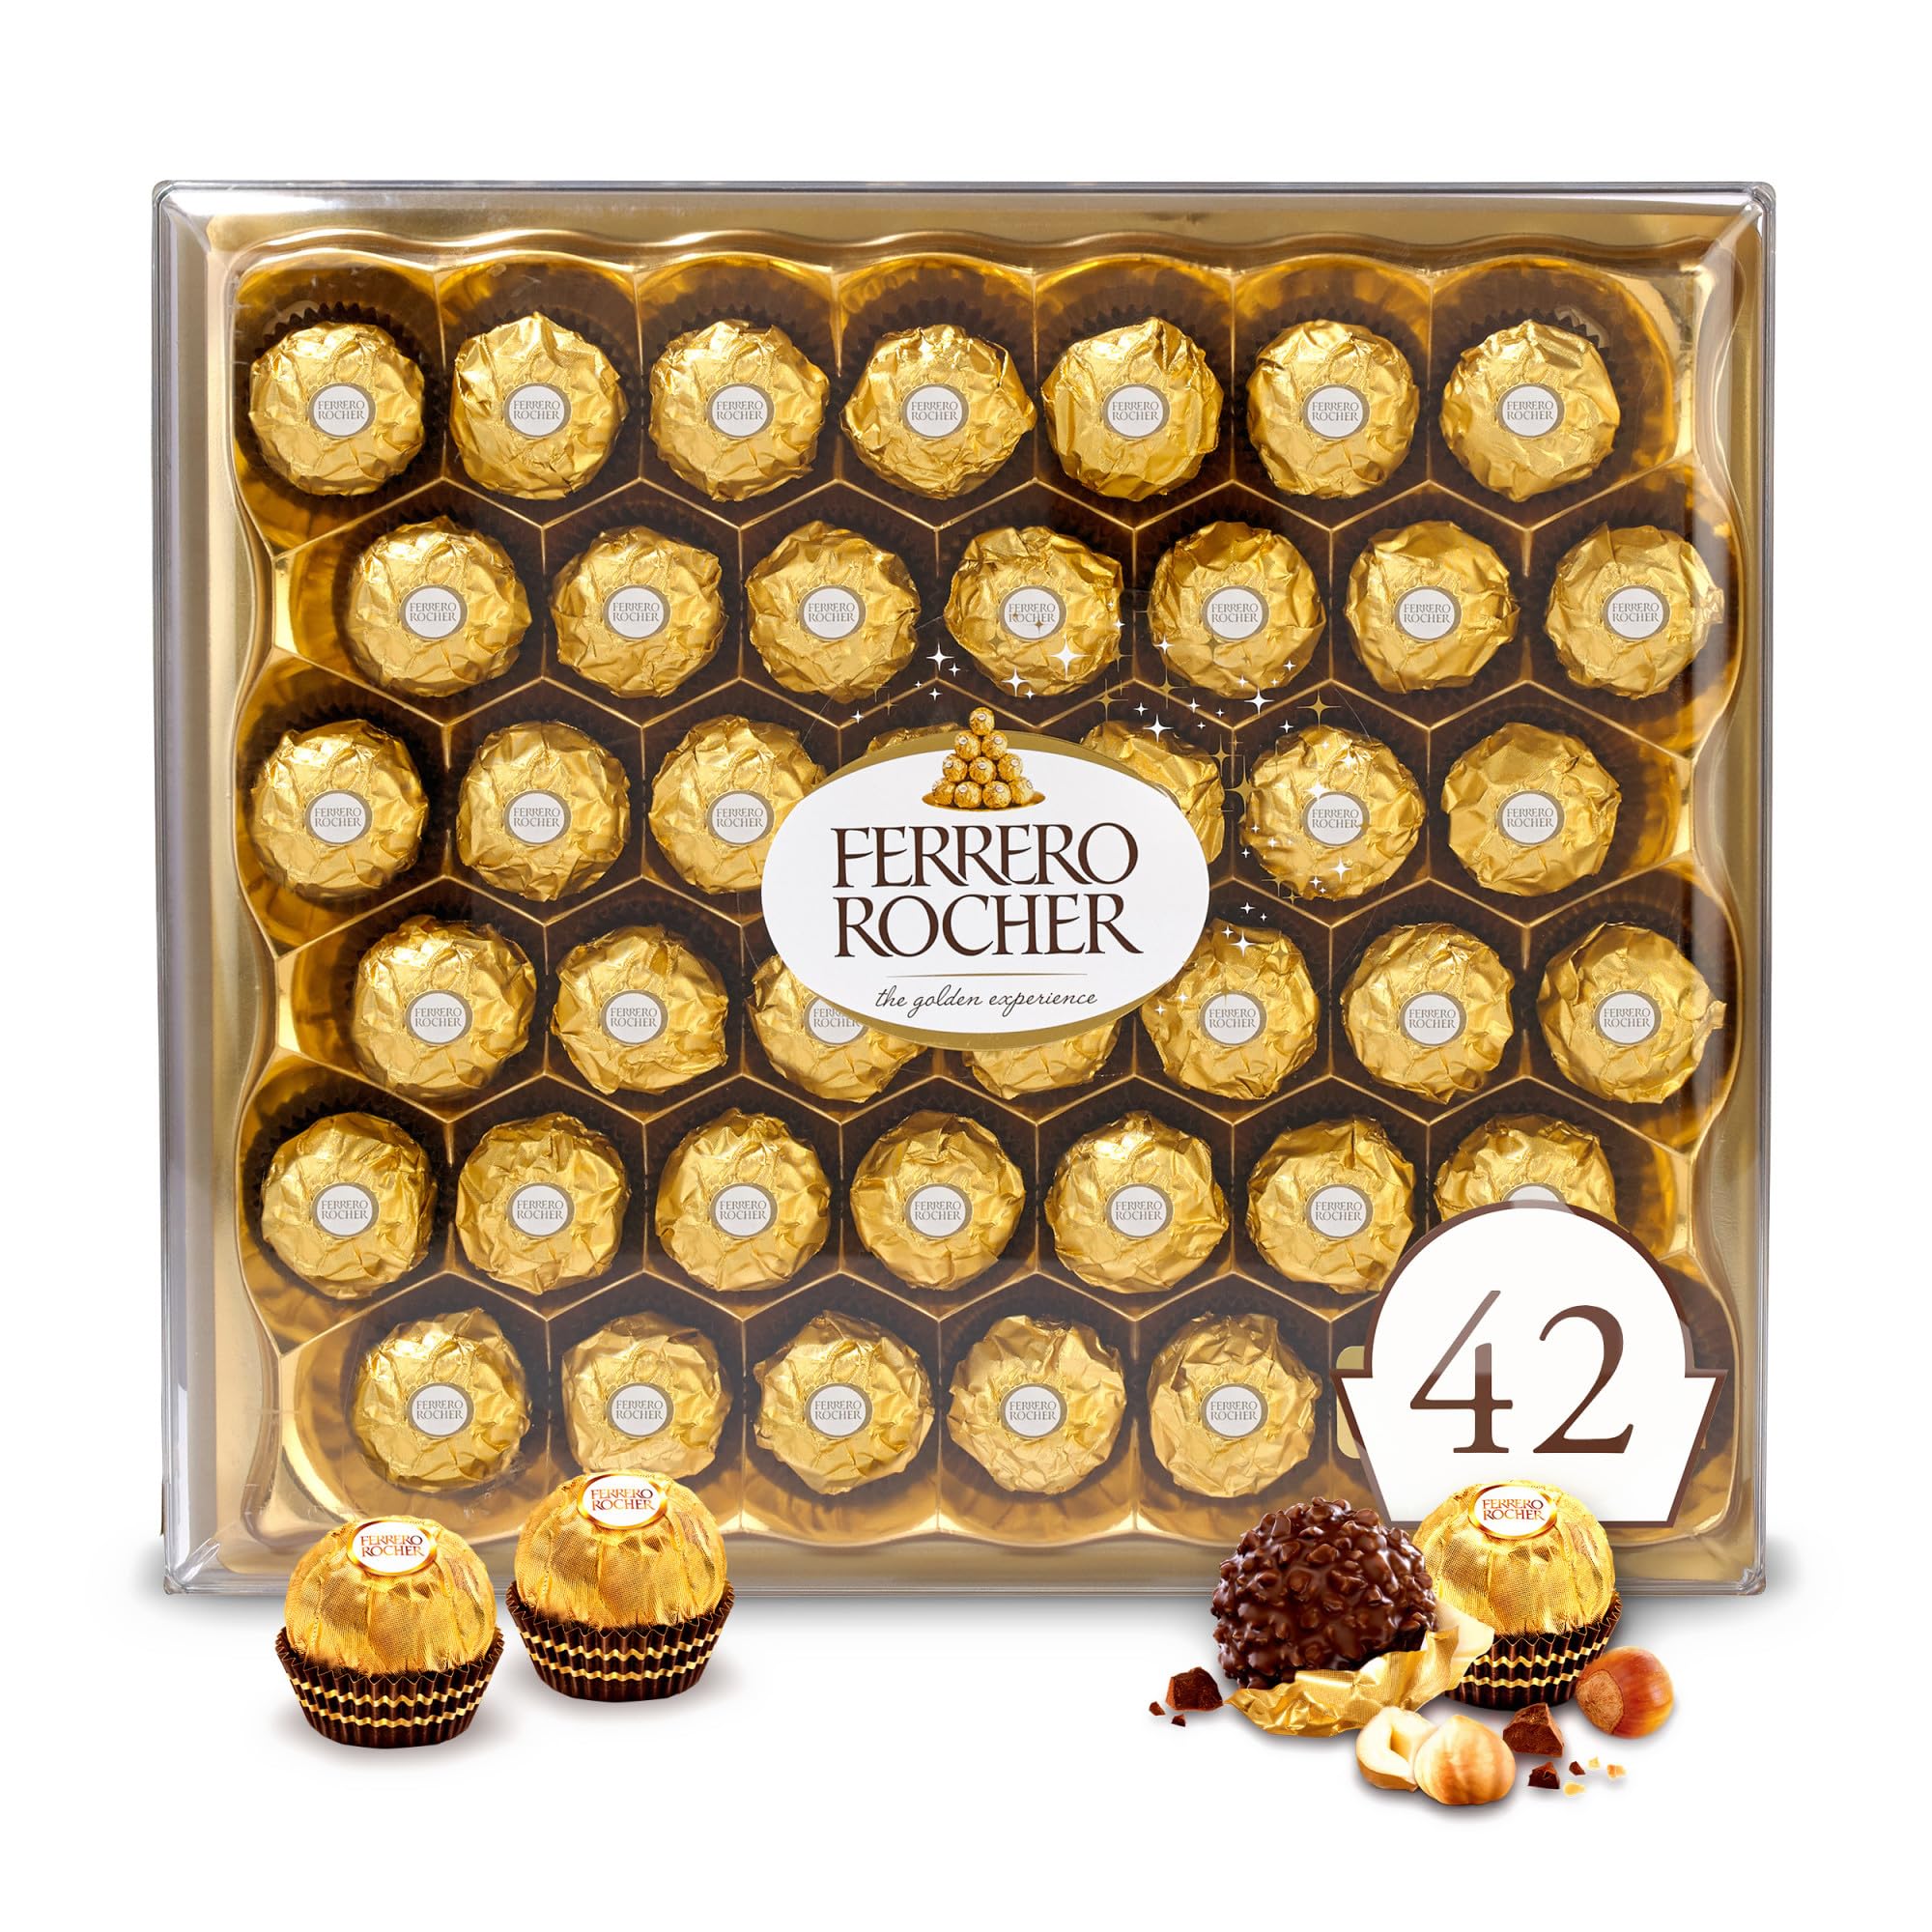 42-Count 18.5-Oz Ferrero Rocher Fine Hazelnut Milk Chocolates Gift Box $13.90 + Free Shipping w/ Prime or on orders over $35